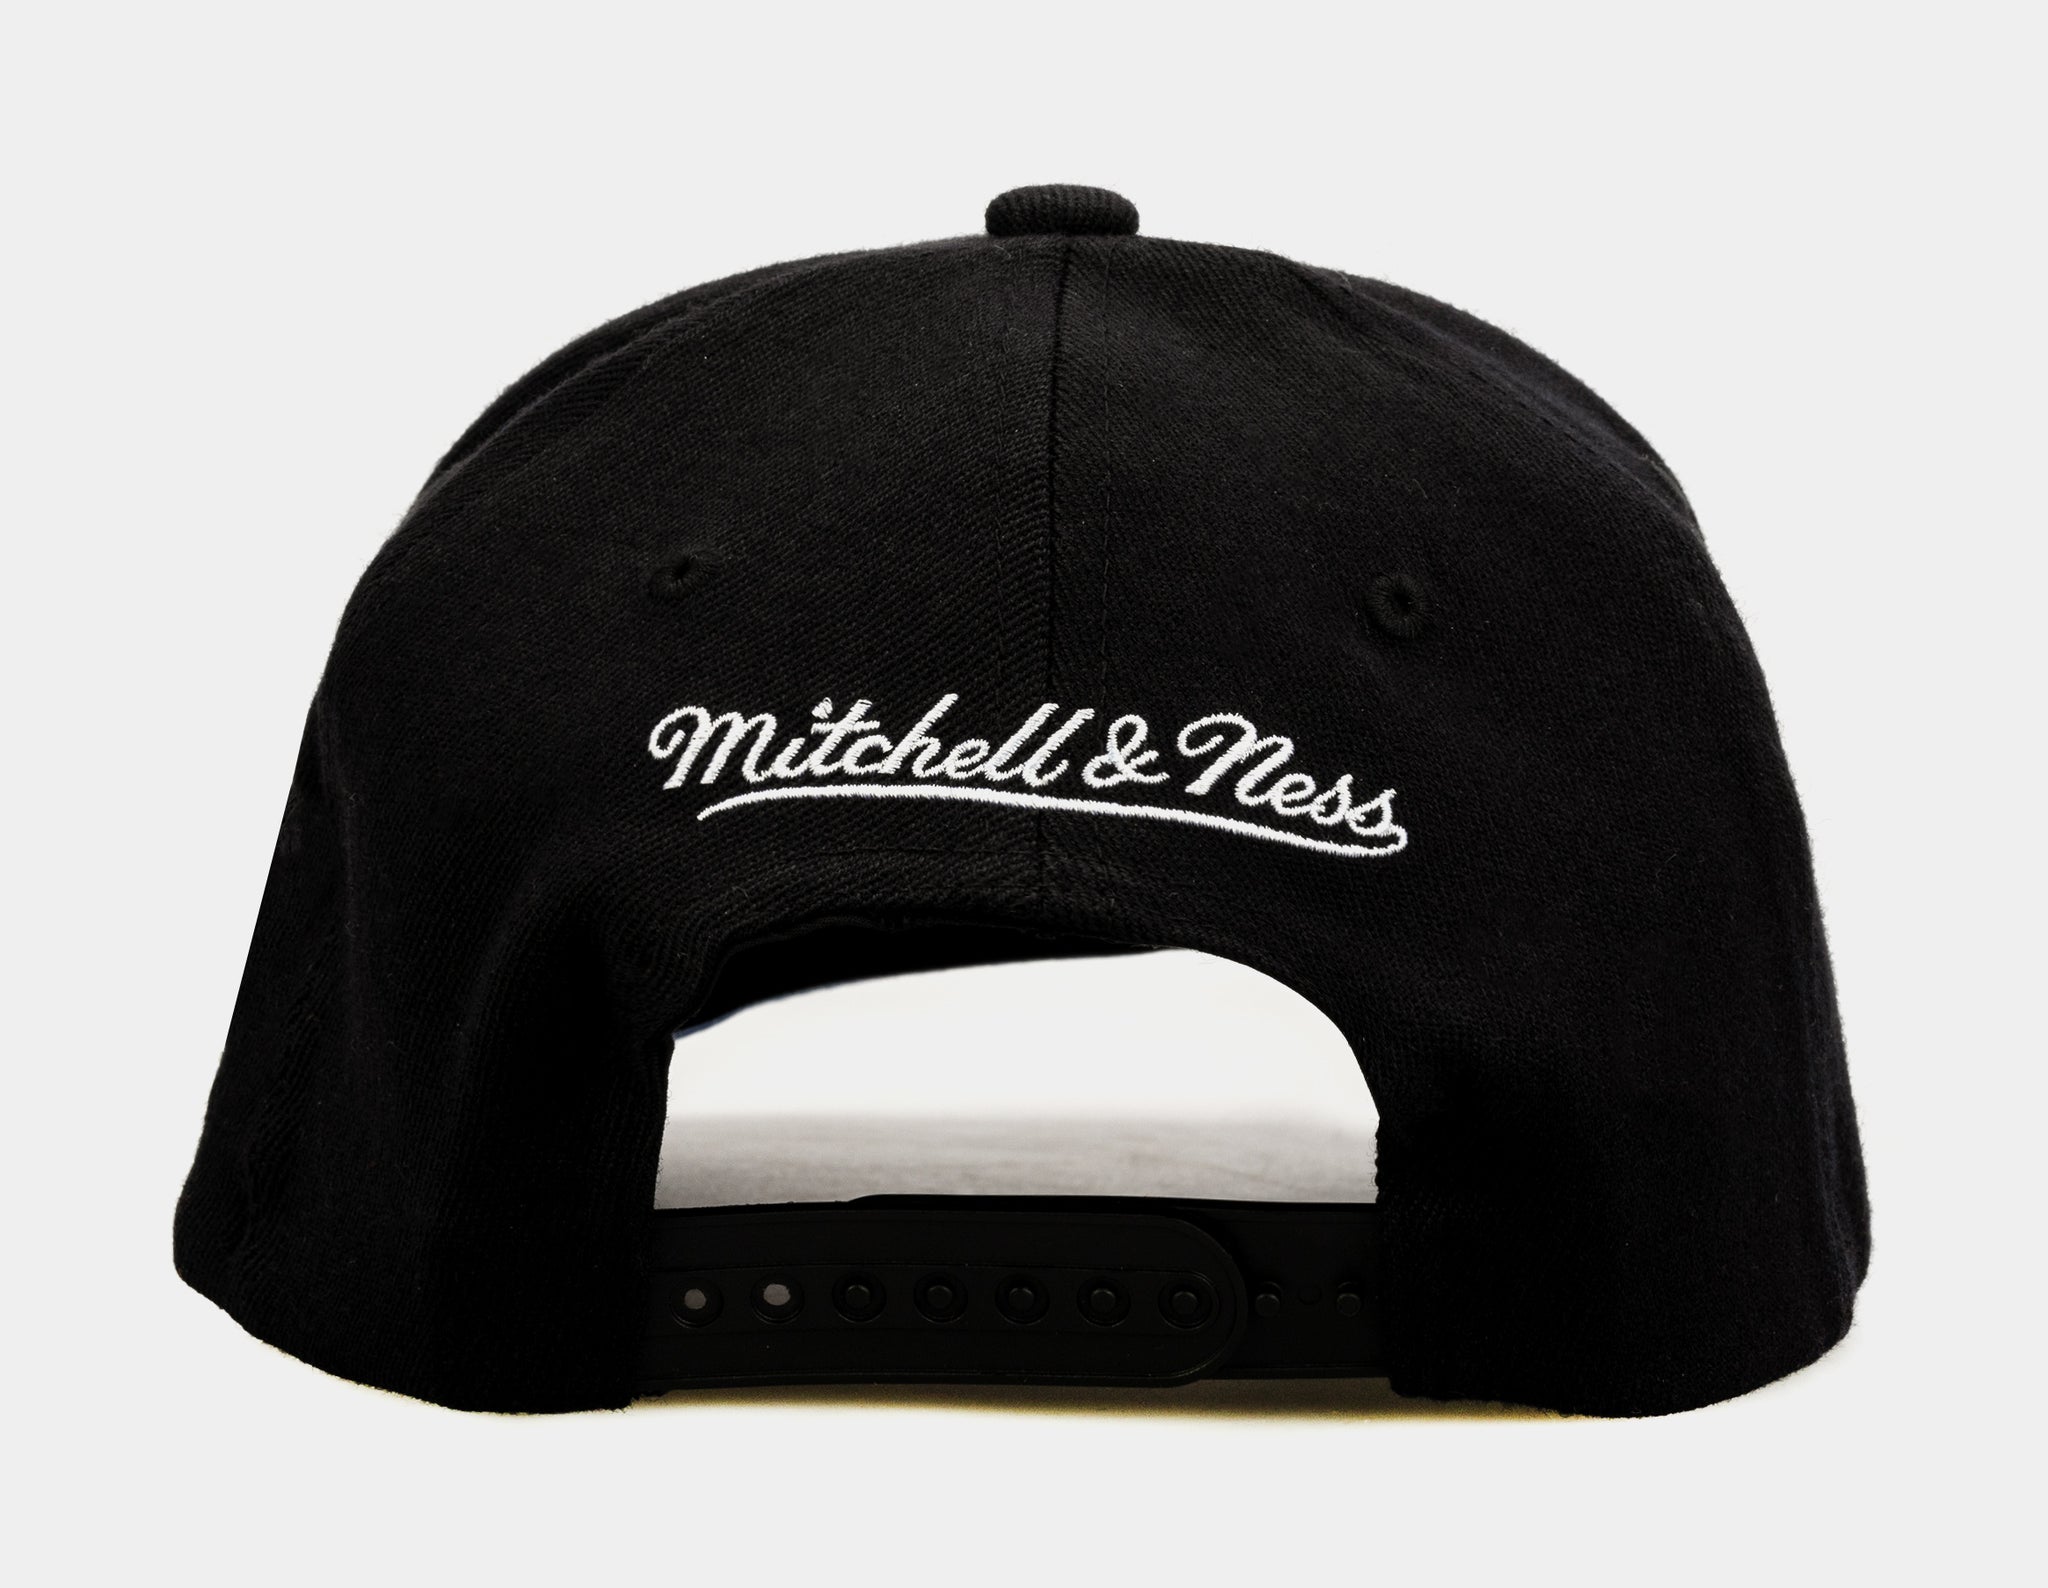 Dallas Mavericks Paintbrush White/Green Snapback - Mitchell & Ness cap